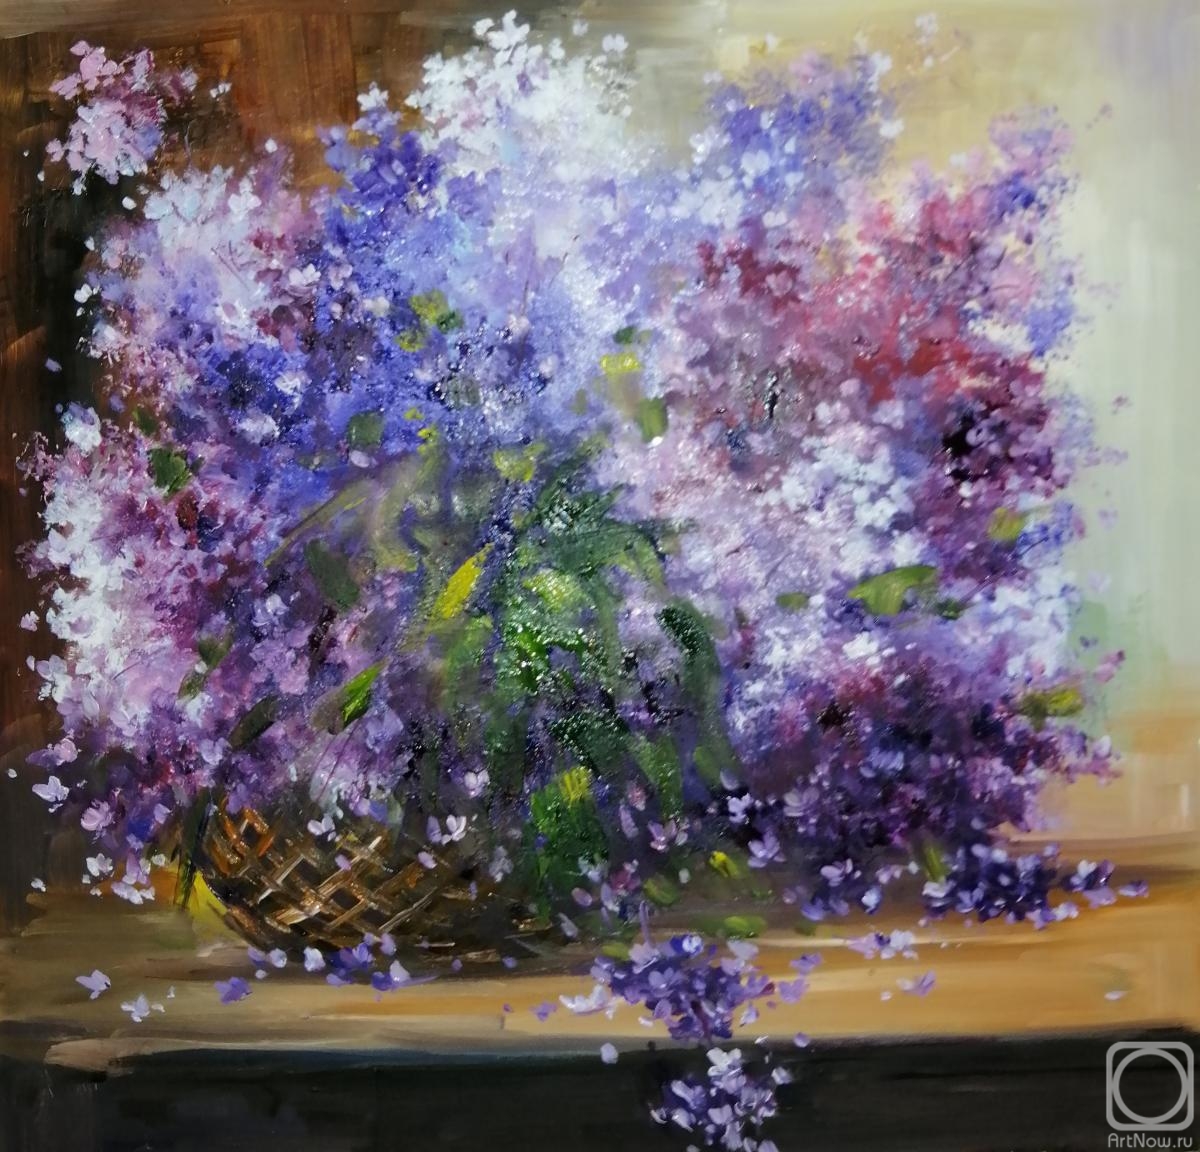 Miftahutdinov Nail. Lilac in the basket